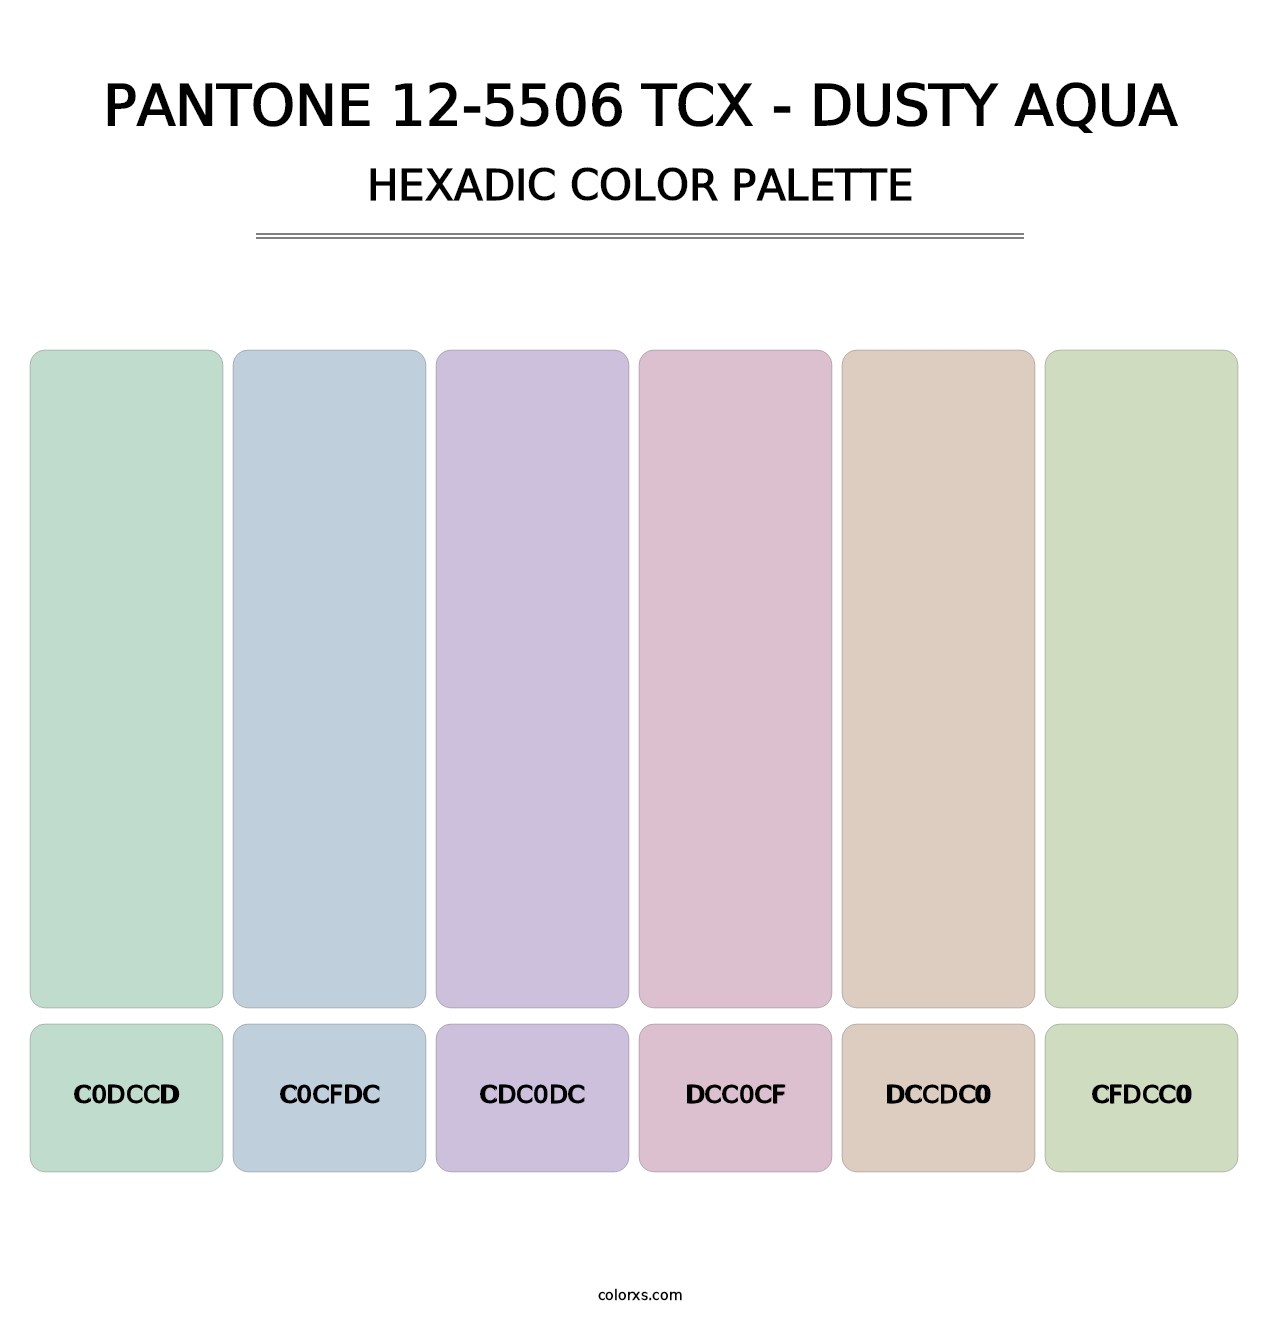 PANTONE 12-5506 TCX - Dusty Aqua - Hexadic Color Palette